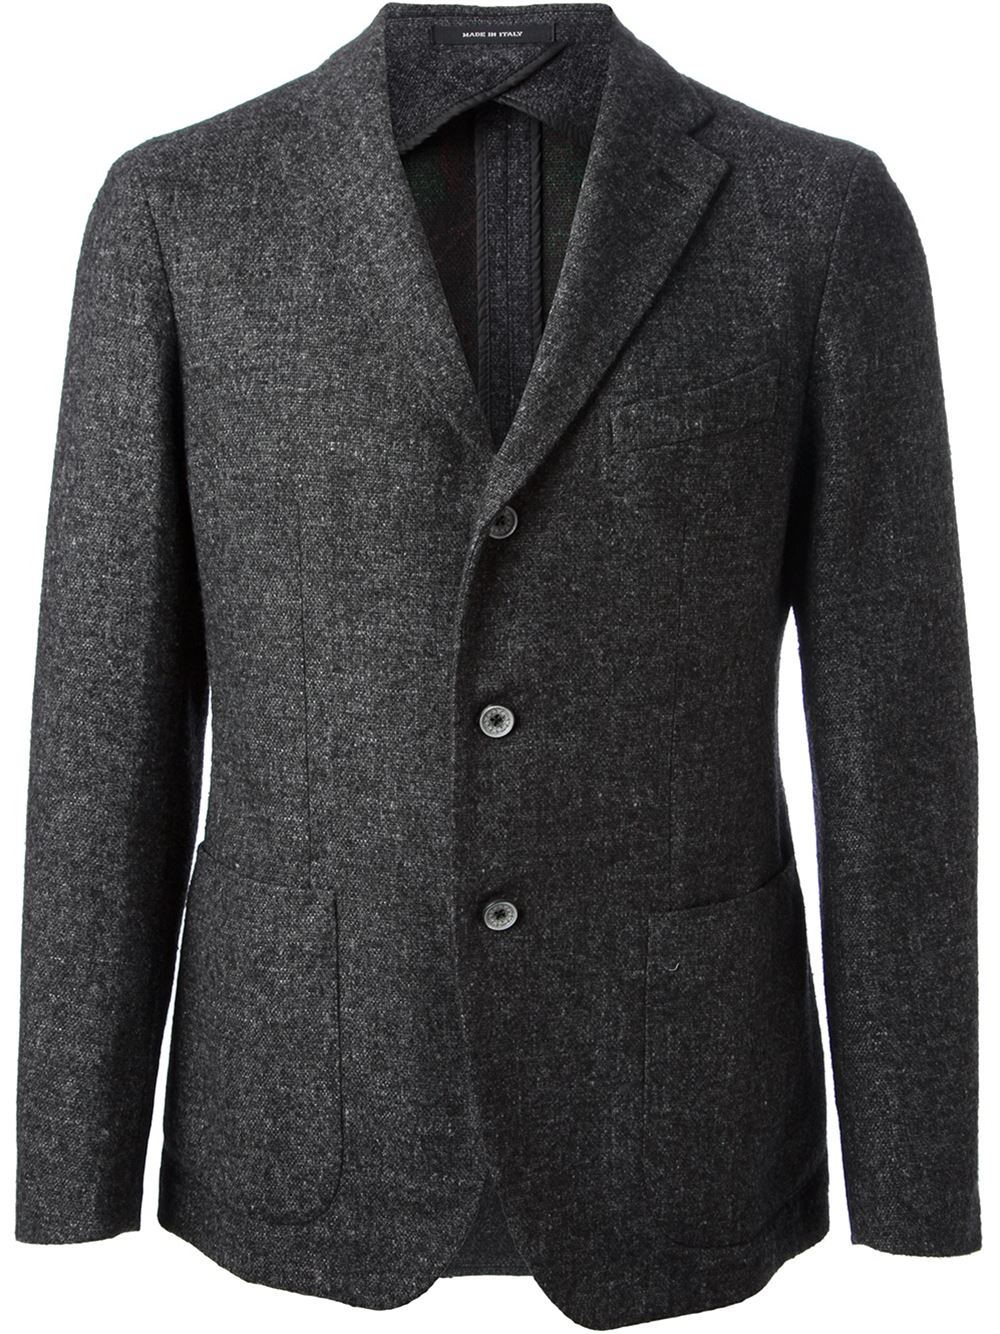 Lyst - Tagliatore Tweed Blazer in Black for Men